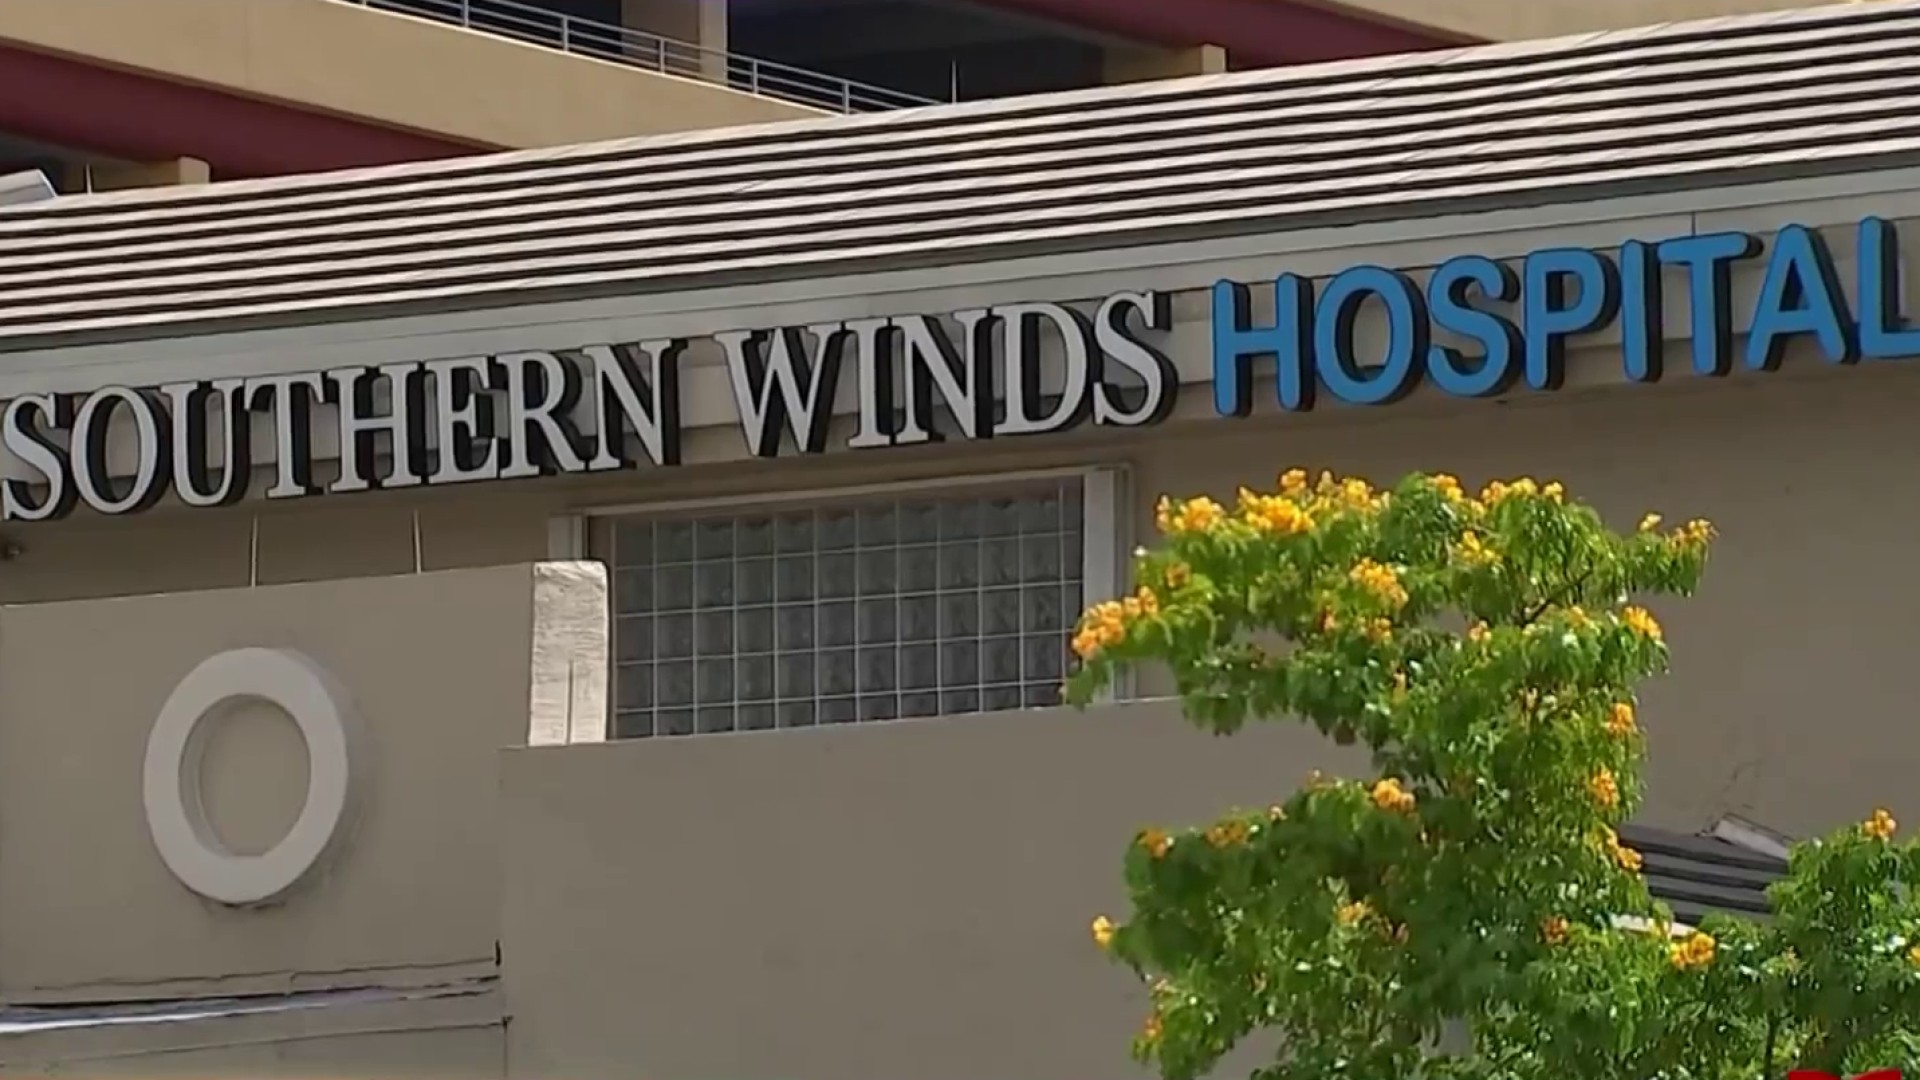 southern winds hospital